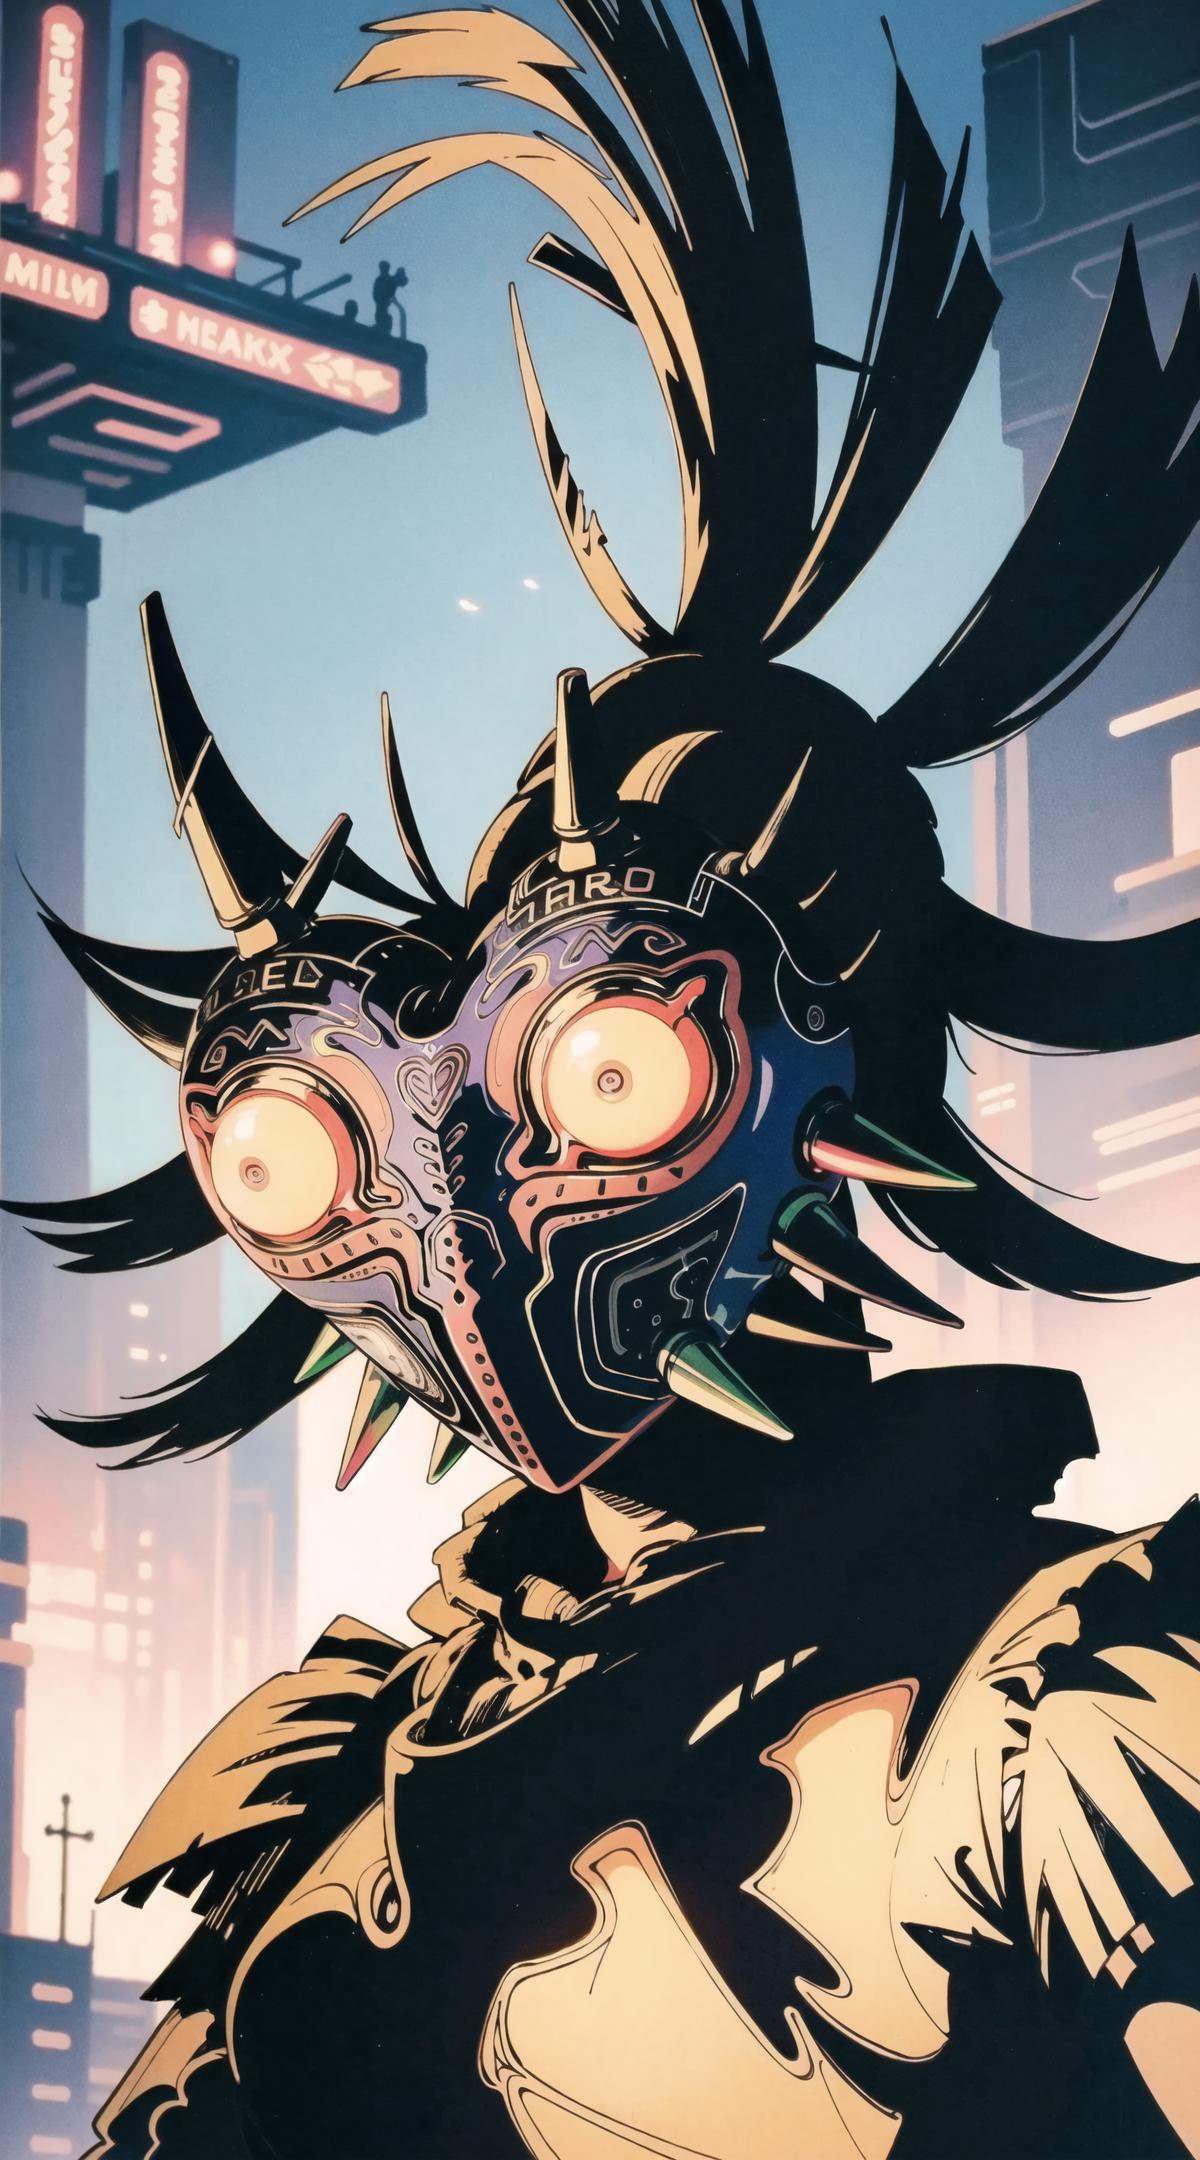 Skull-Kid (Zelda Majora's Mask) image by Proteinique